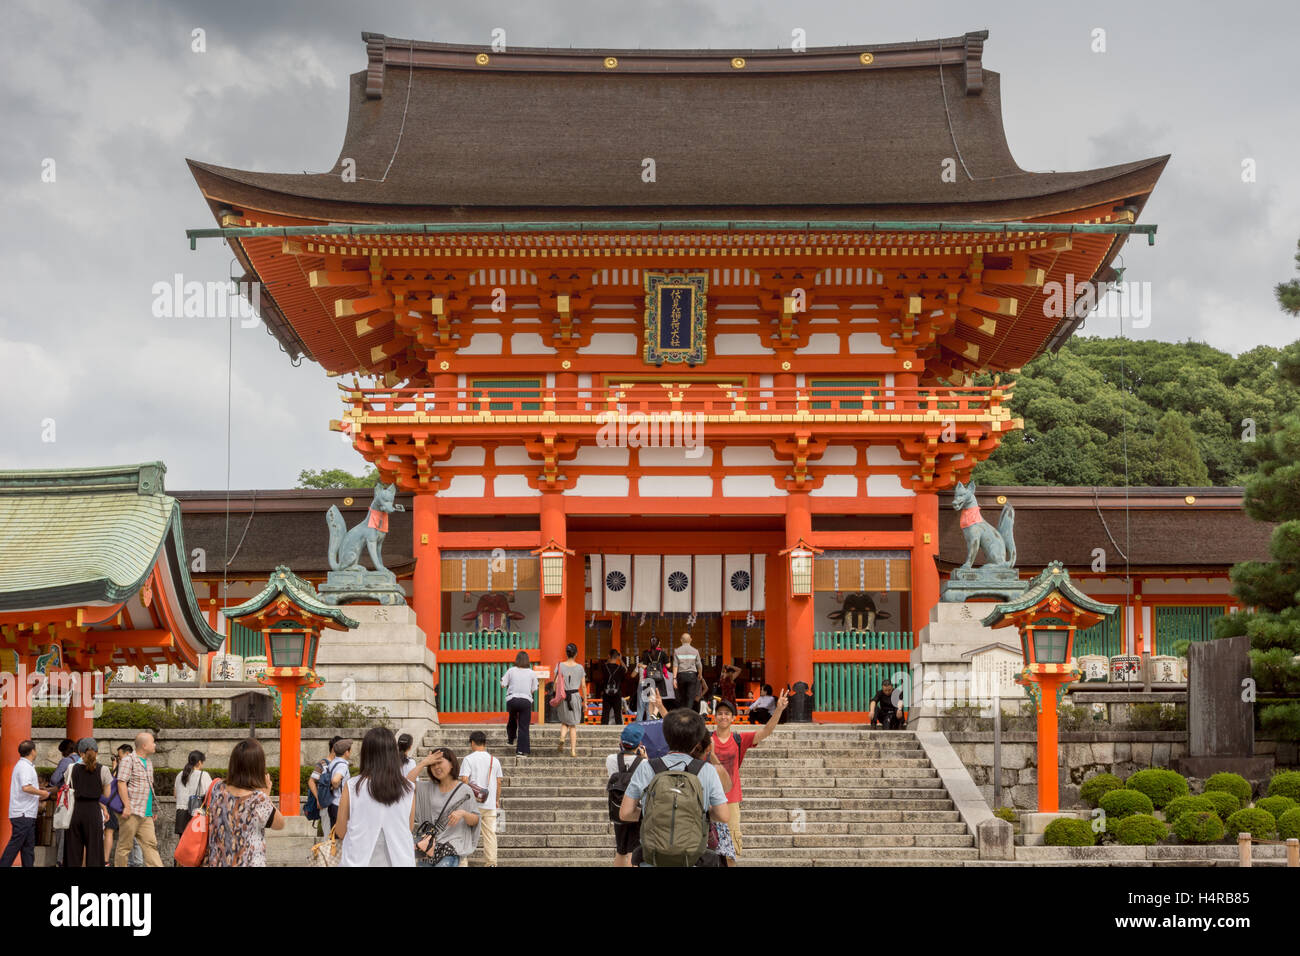 Les gens de monter les marches à Fushimi Inari Taisha temple shintoïste. Banque D'Images